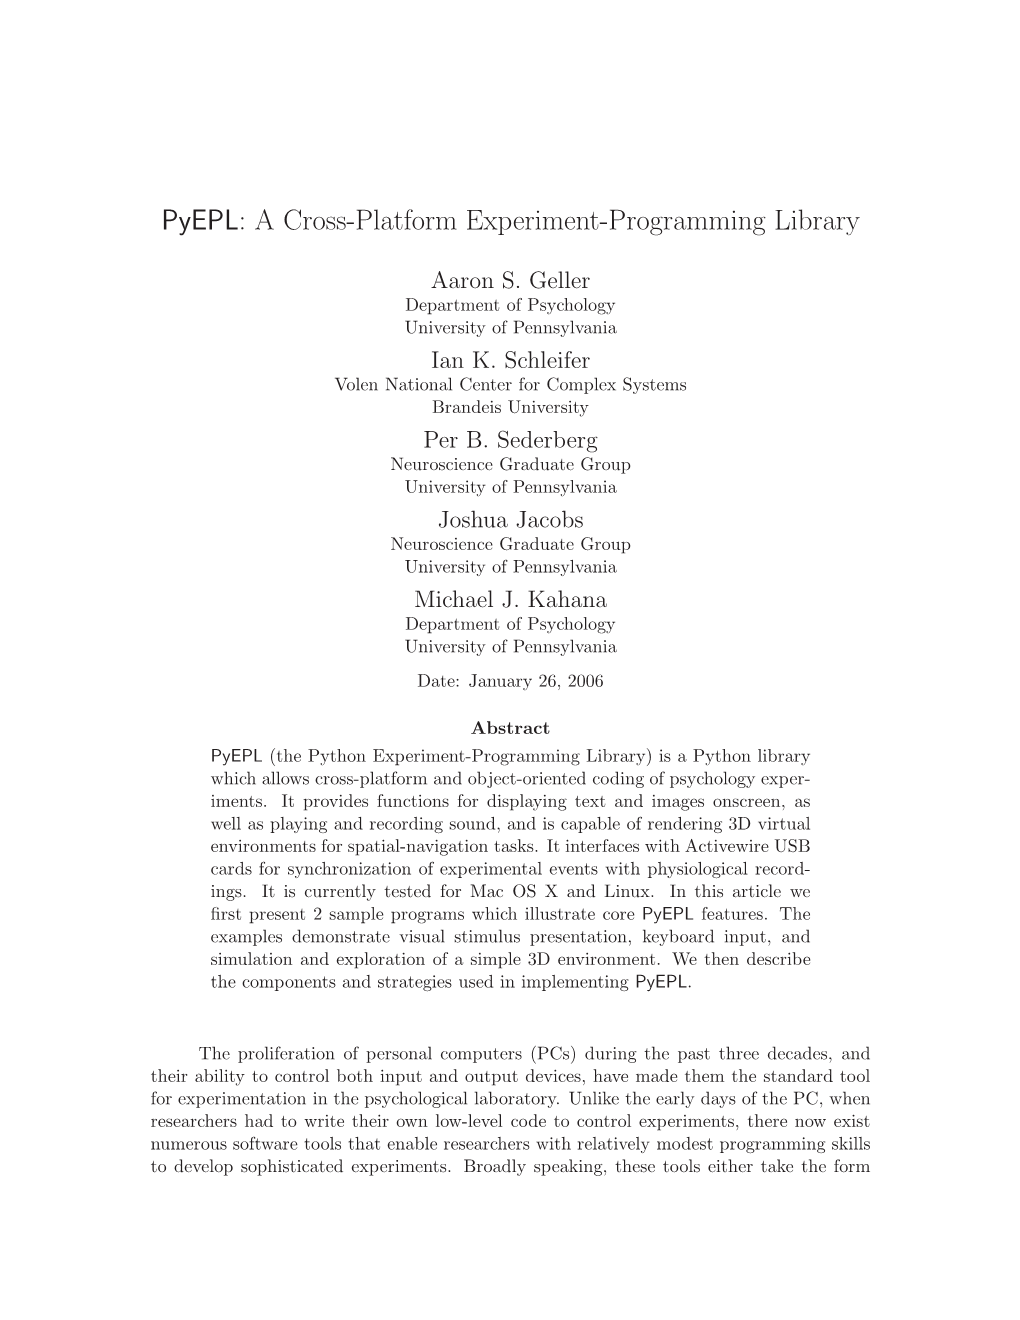 Pyepl: a Cross-Platform Experiment-Programming Library